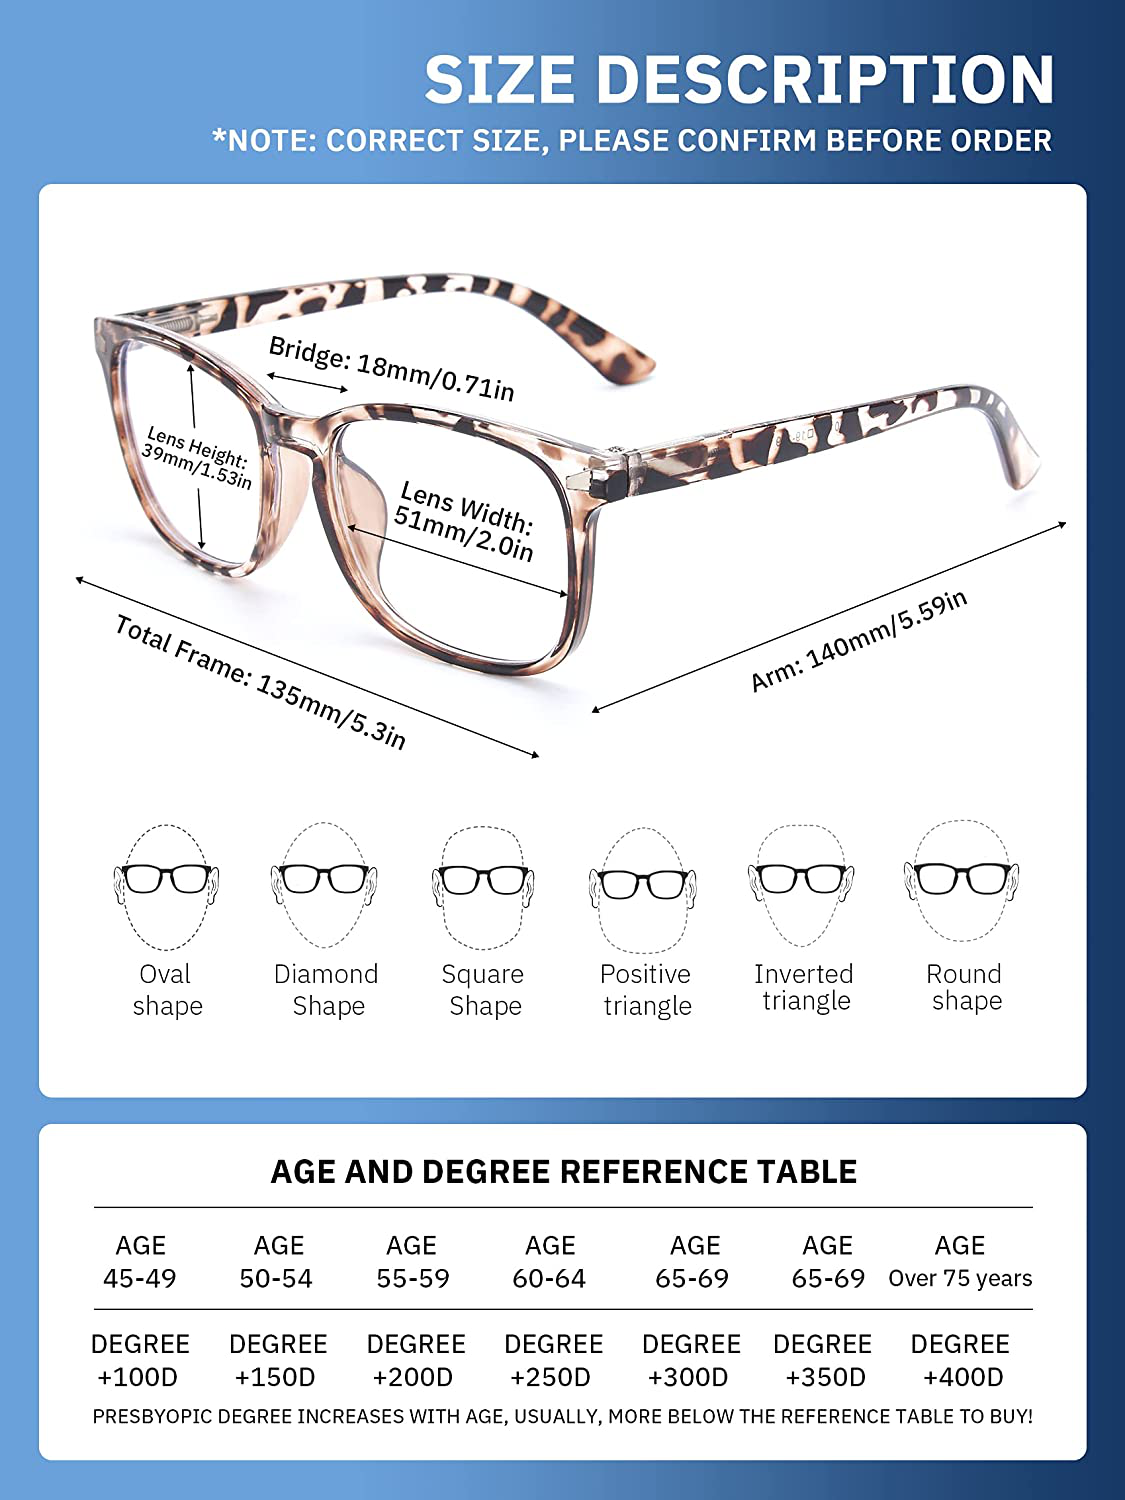 CCVOO 5 Pack Blue Light Blocking Reading Glasses, Filter UV Ray/Glare Fashion Non Prescription Fake Gaming Eyeglasses Women/MenC1 Mix, 0.0)